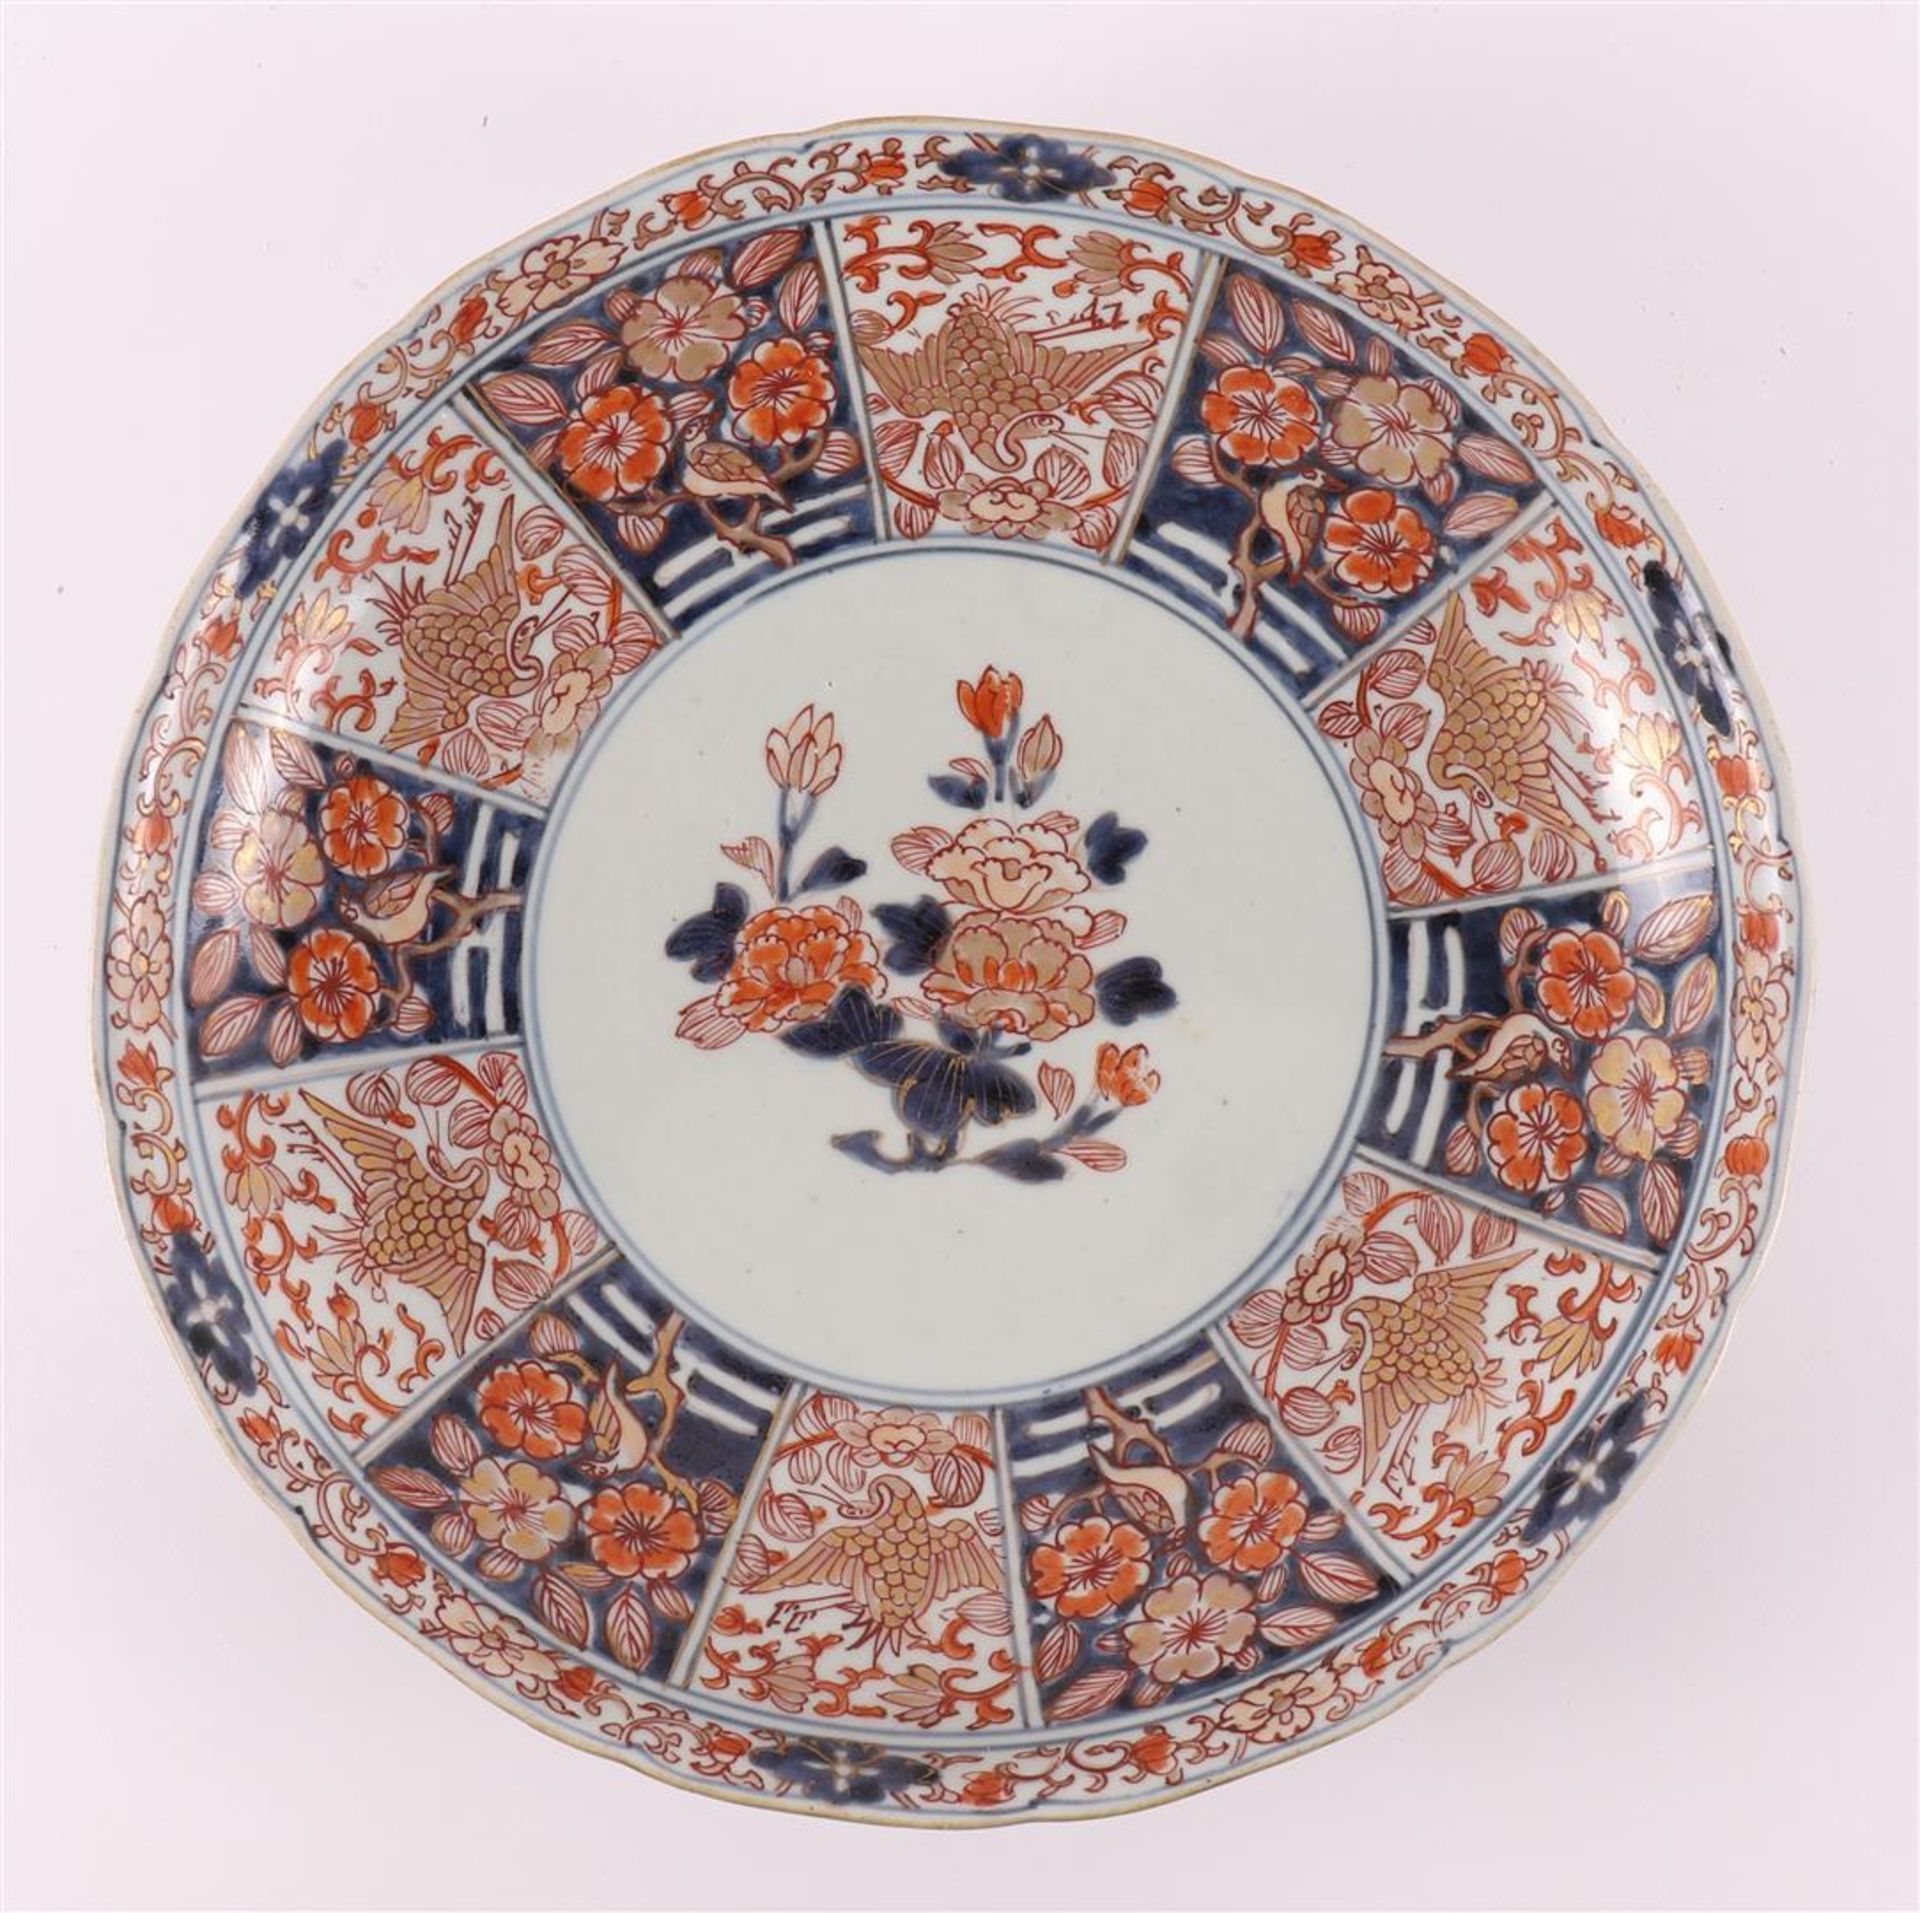 A porcelain Imari dish with contoured edge, Japan, 18th century.